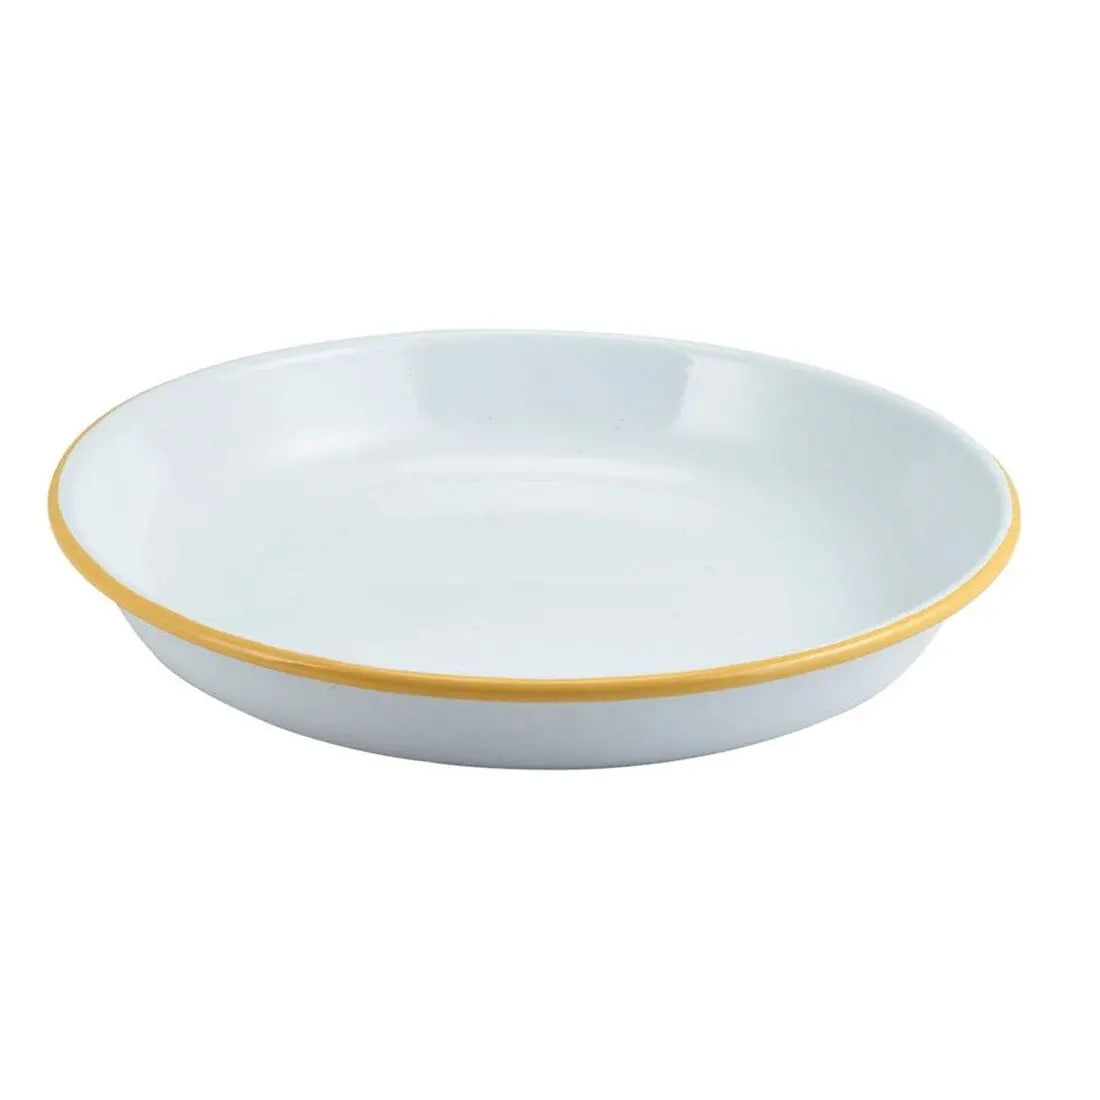 Personalised Enamel Pasta Bowl Enamel - White with Yellow Rim  